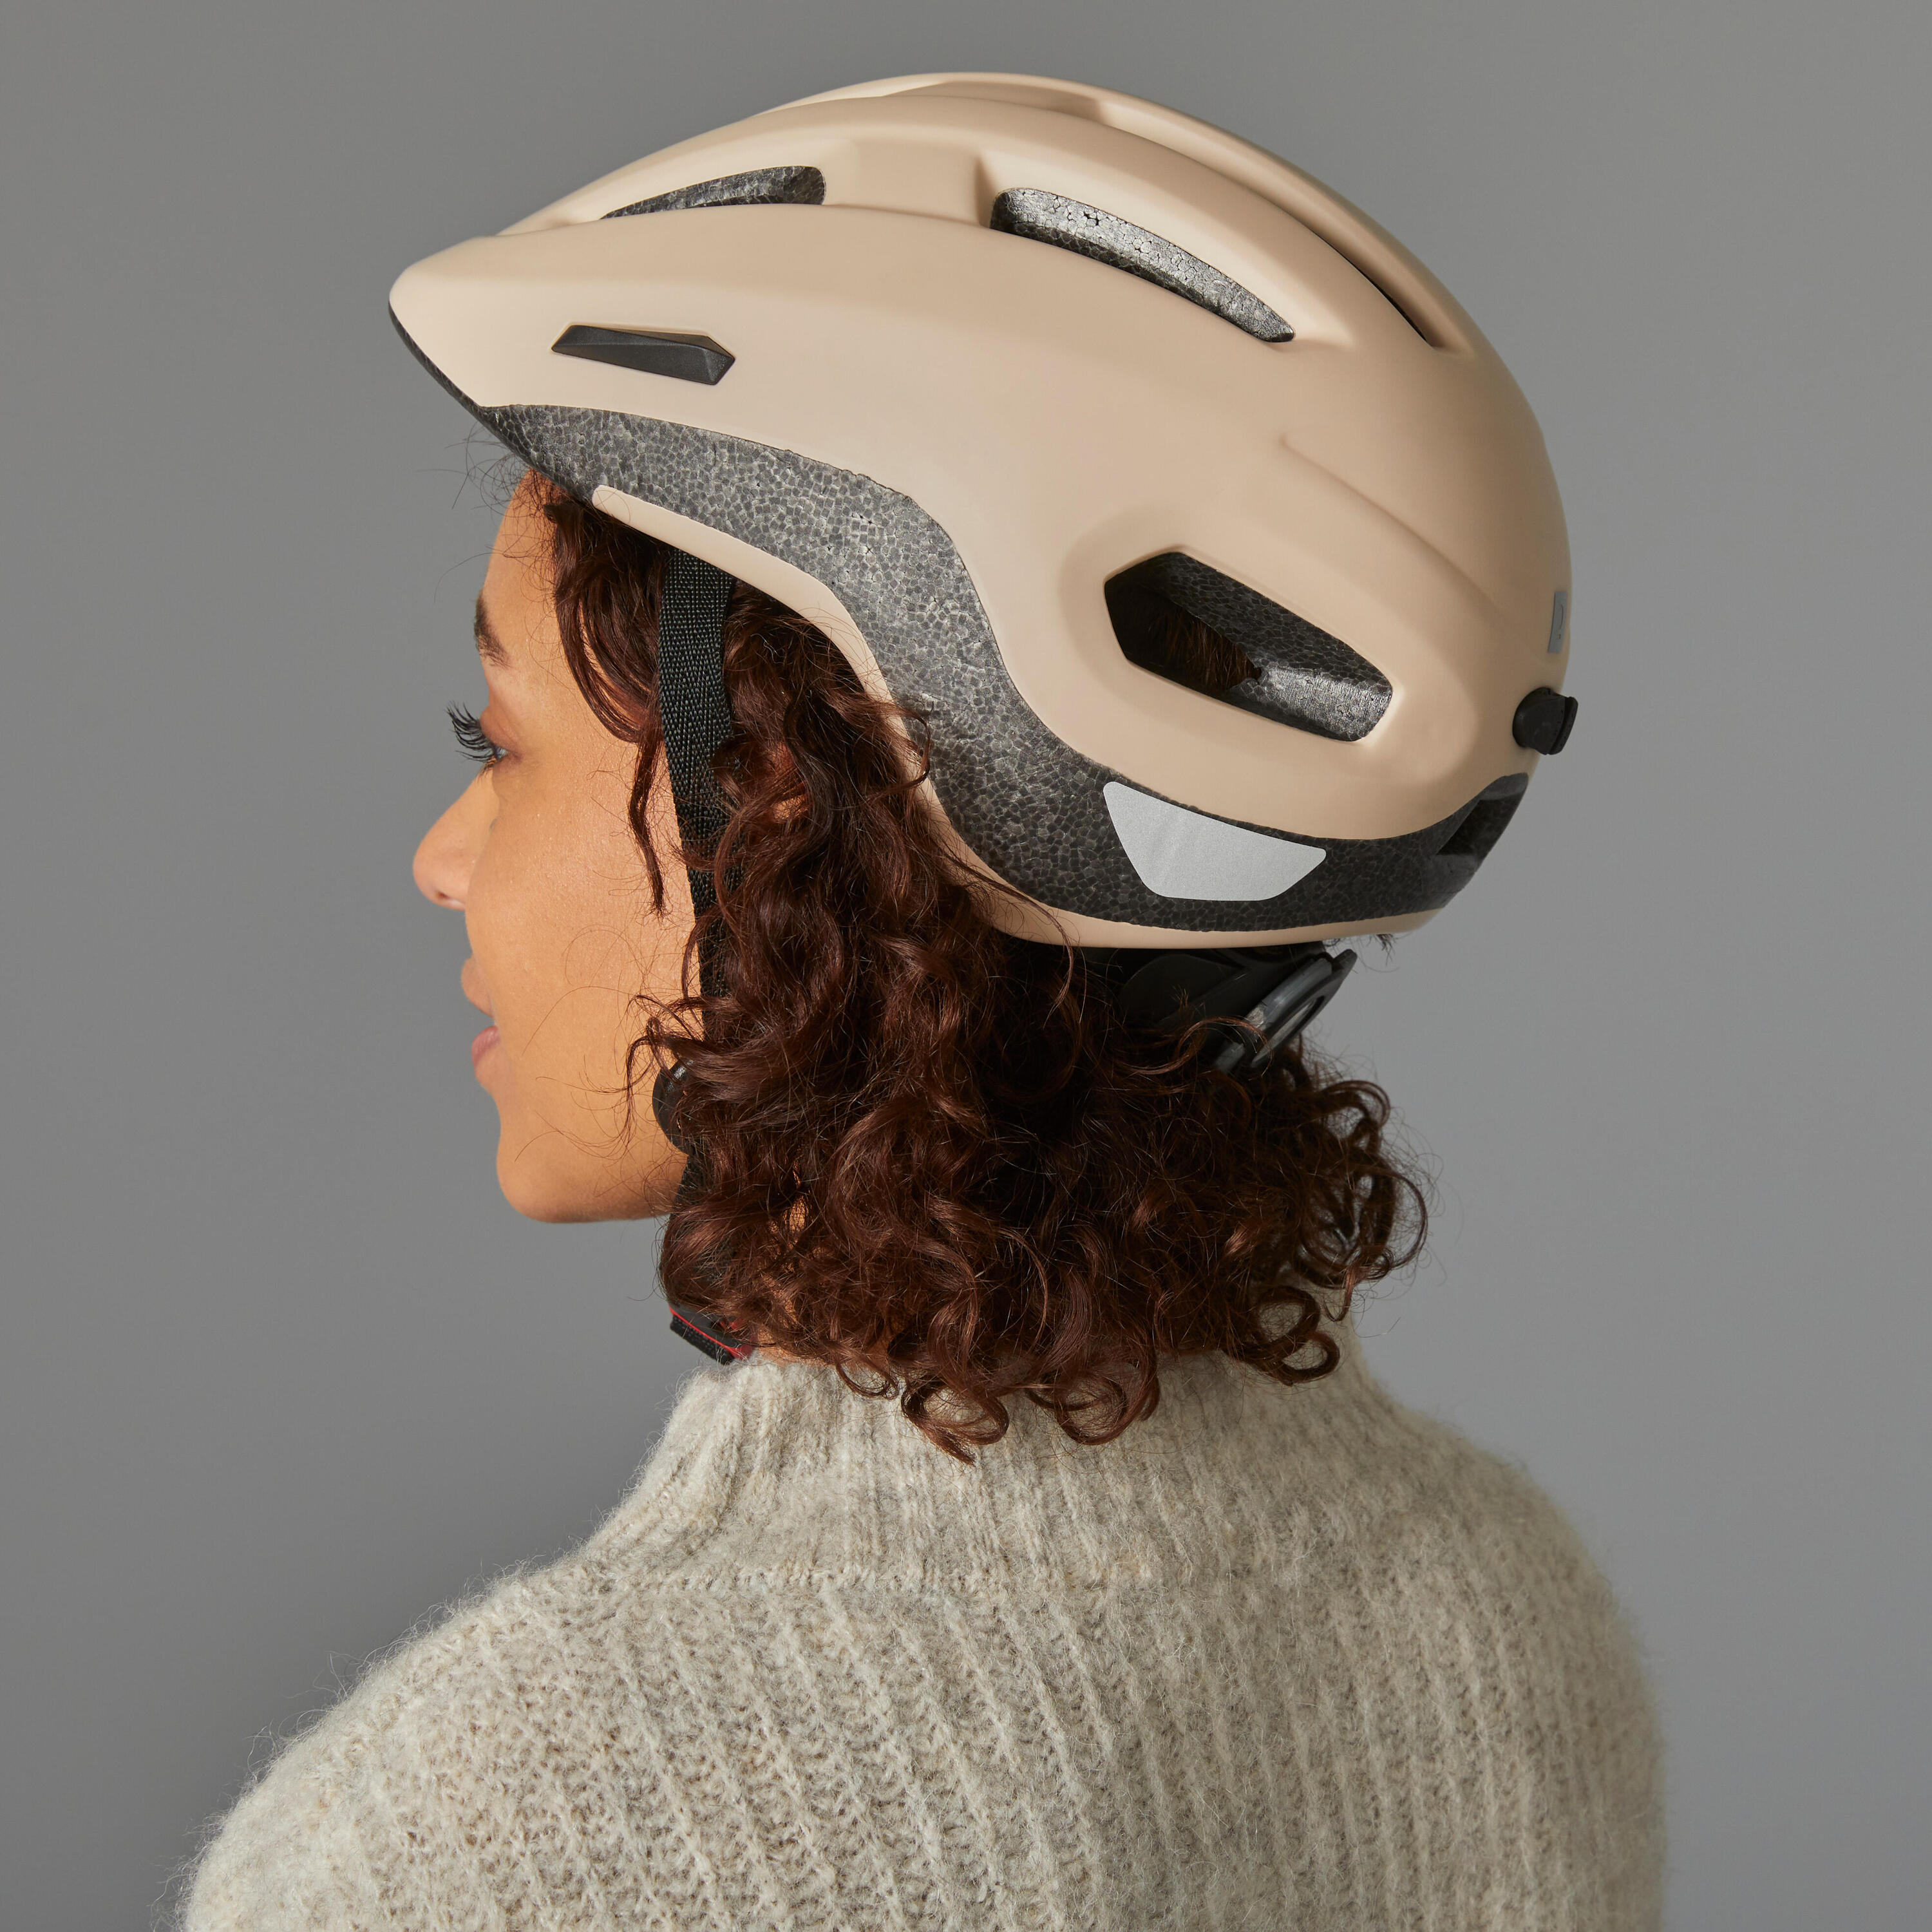 City Cycling Helmet 500 10/10